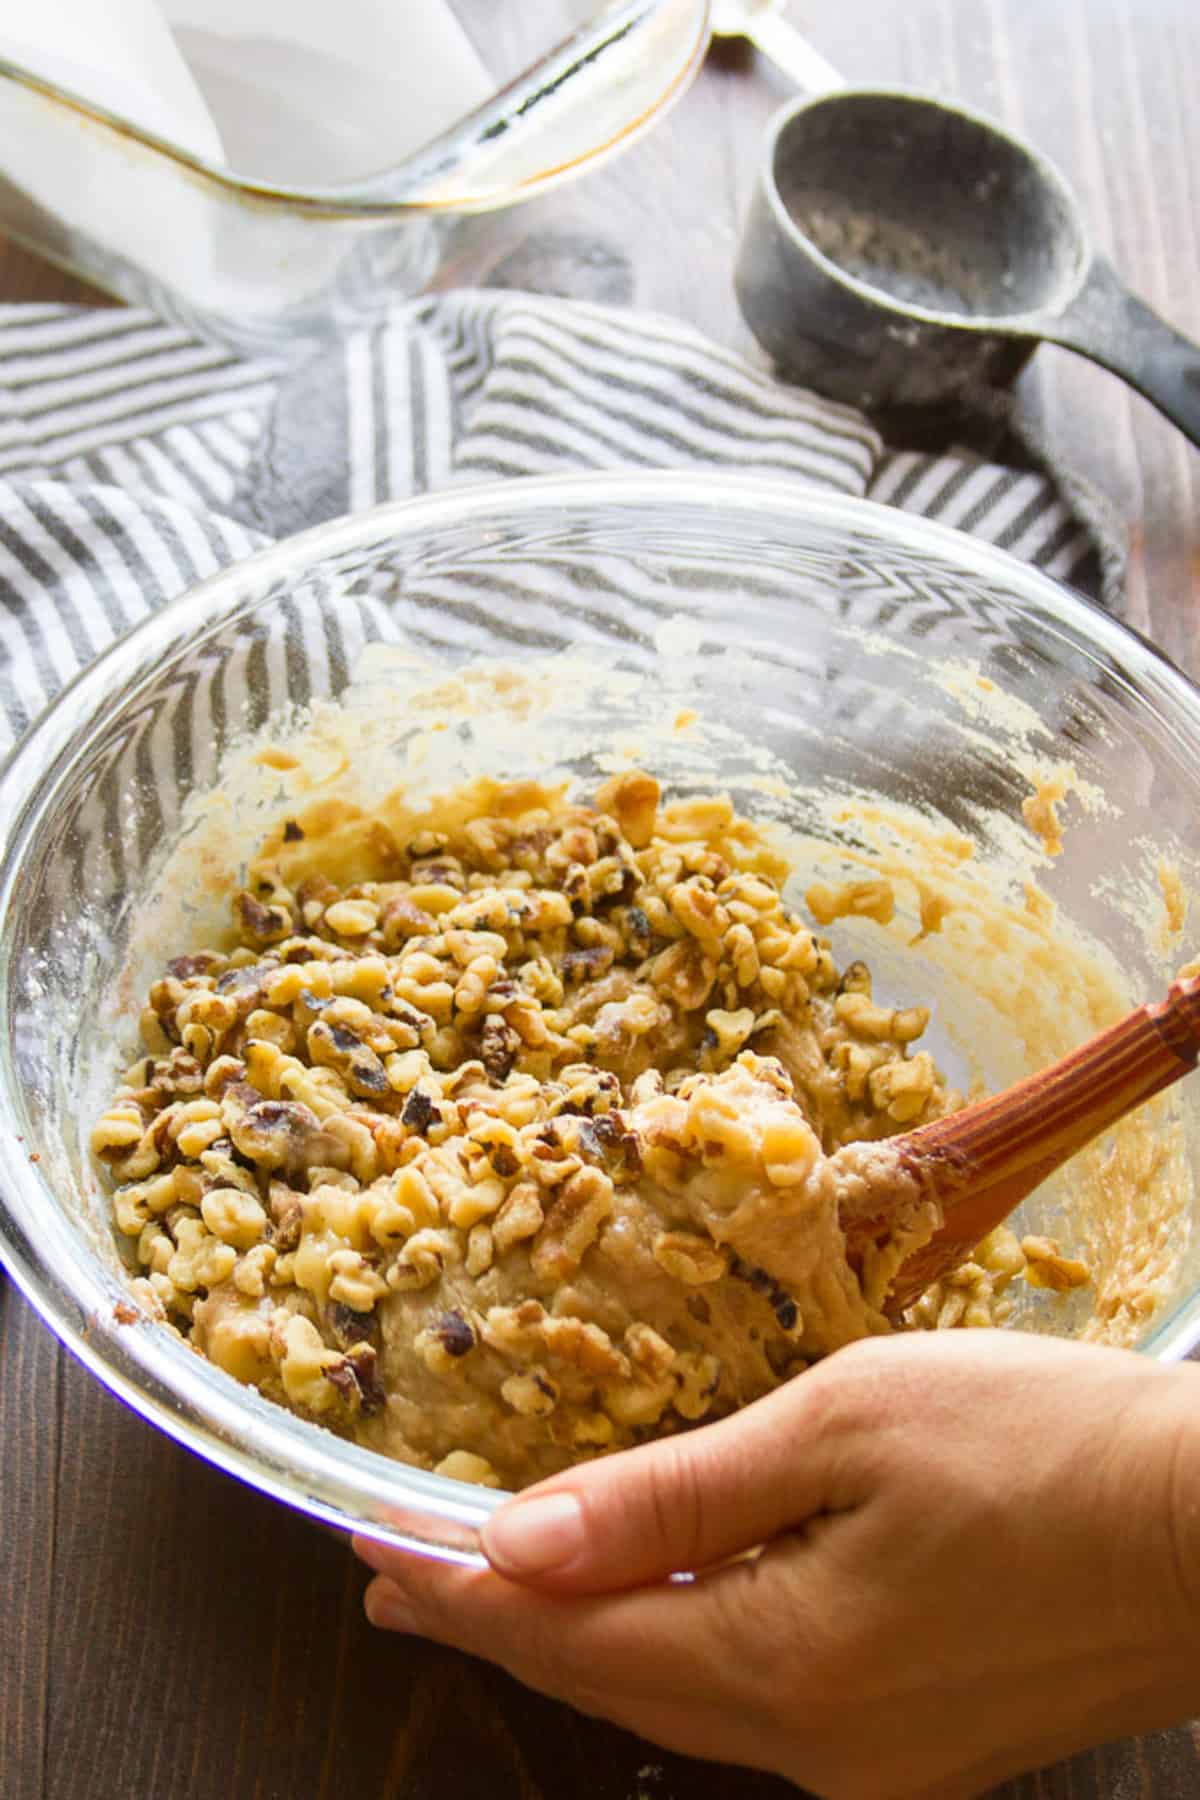 Hands stirring walnuts into Vegan Banana Bread batter in a bowl.